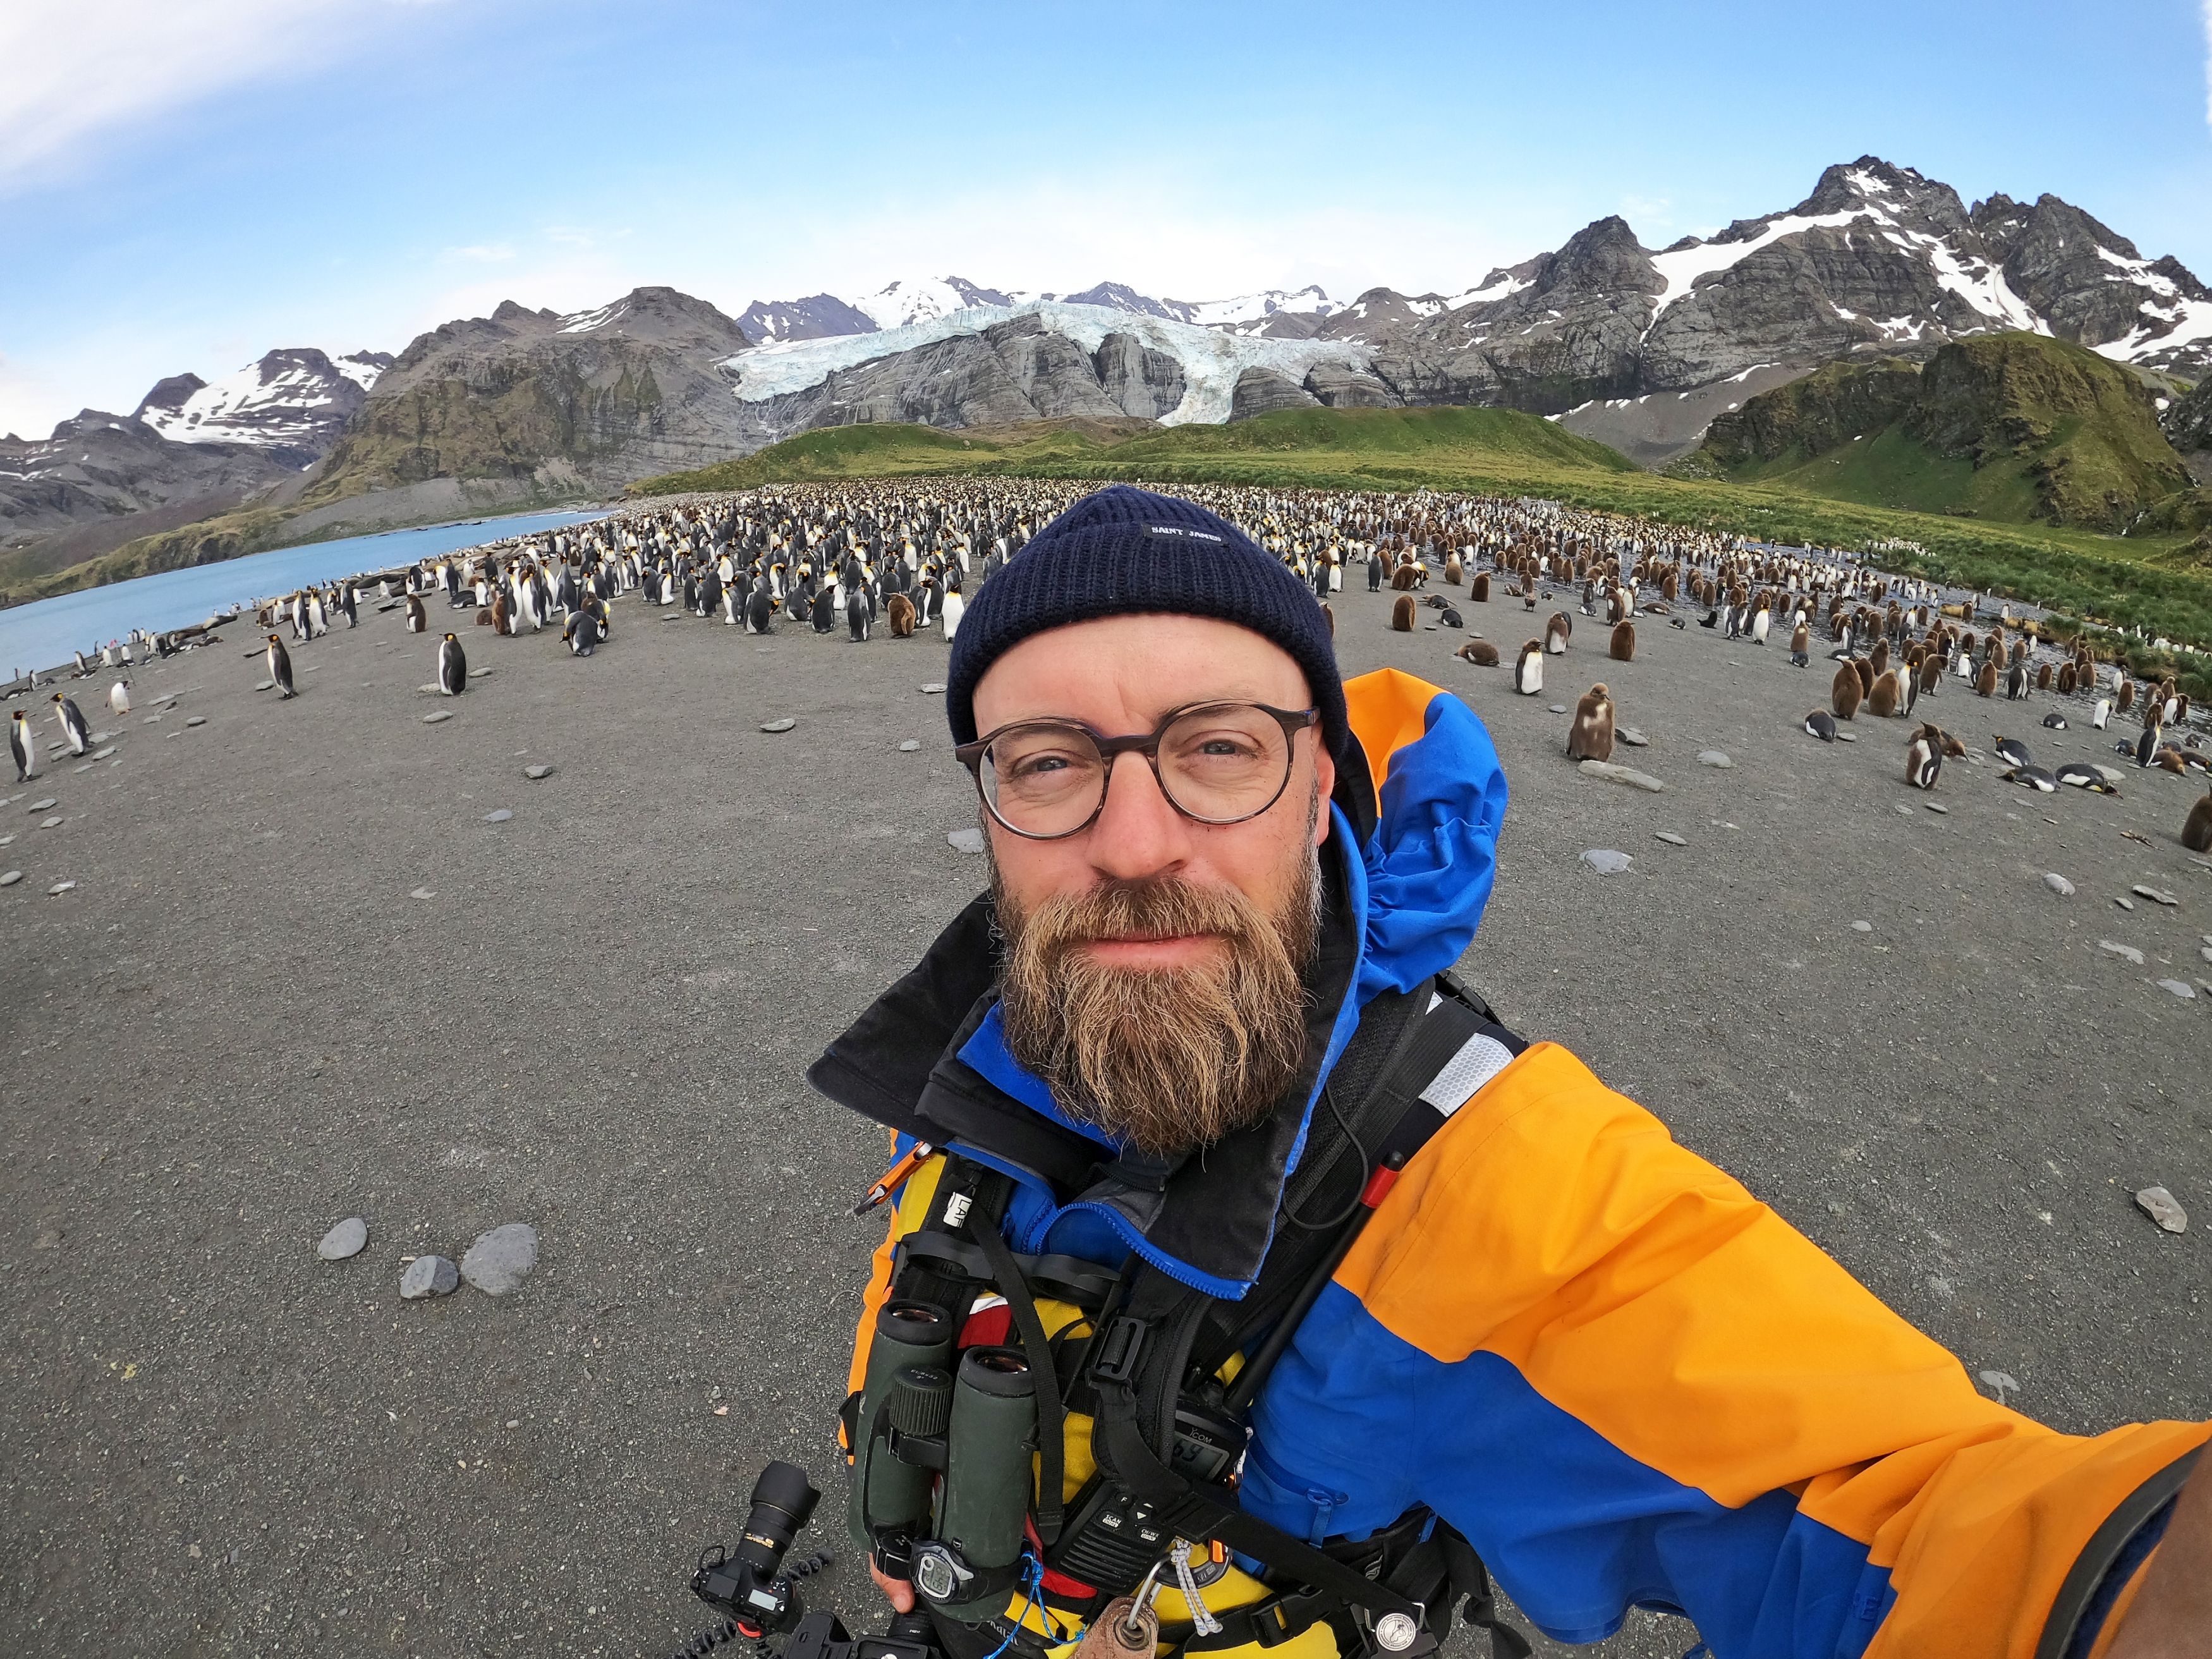 Wildlife Photographer Captures A ‘Never Before Seen’ 1-In-146k Yellow Penguin